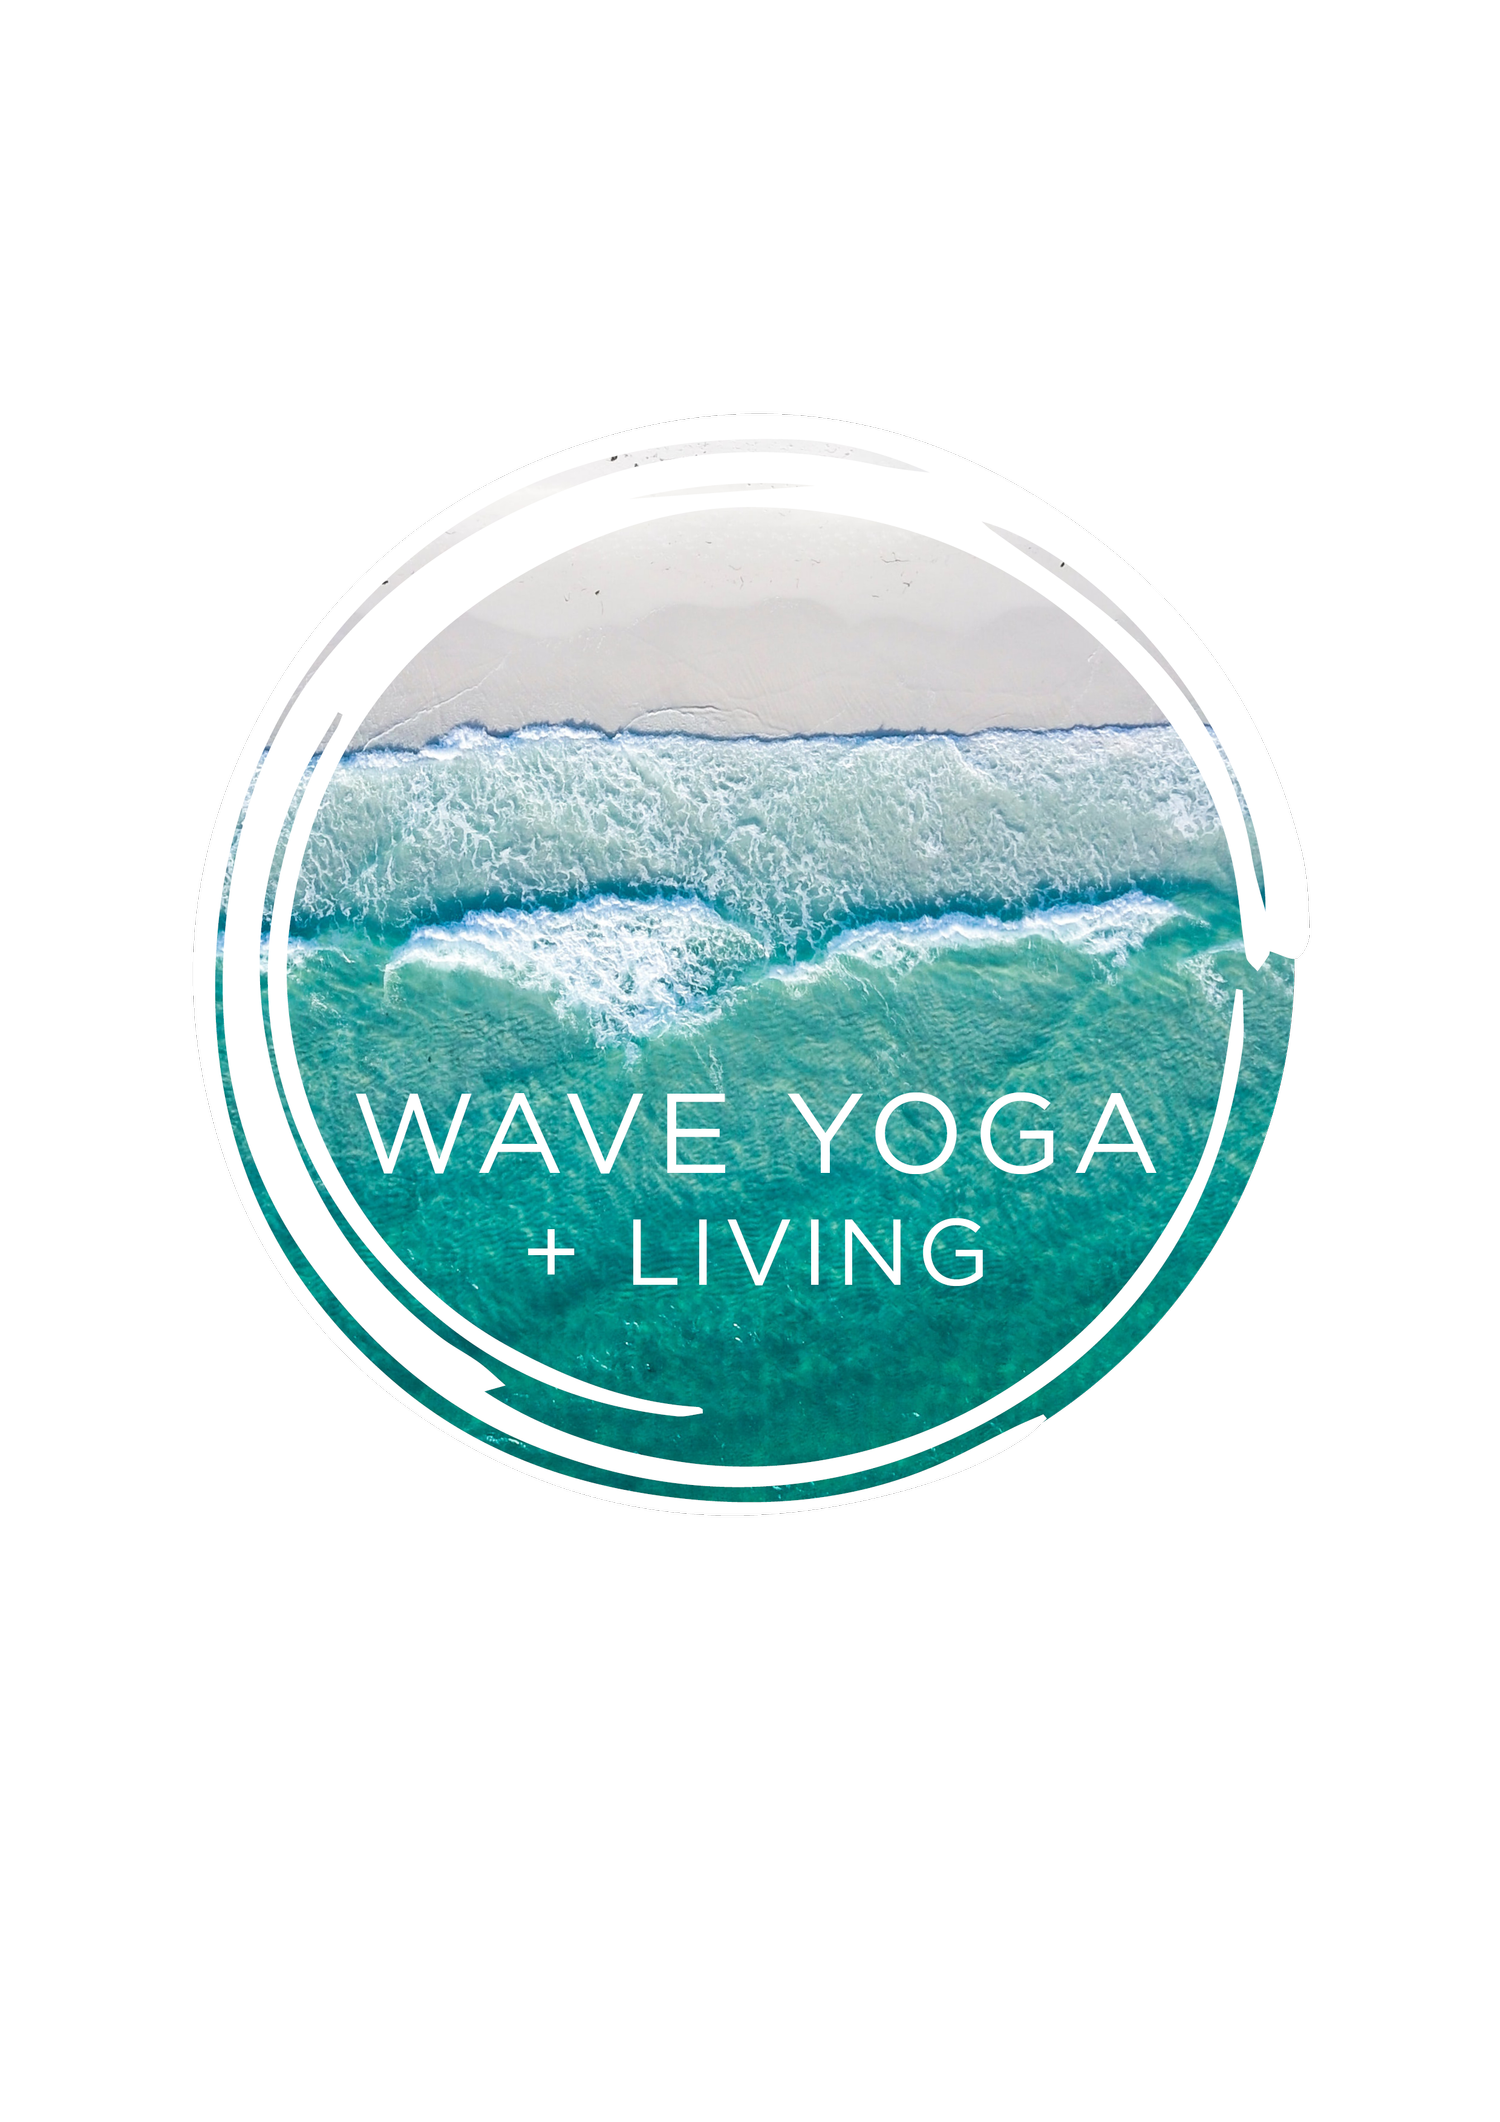 Wave Yoga + Living